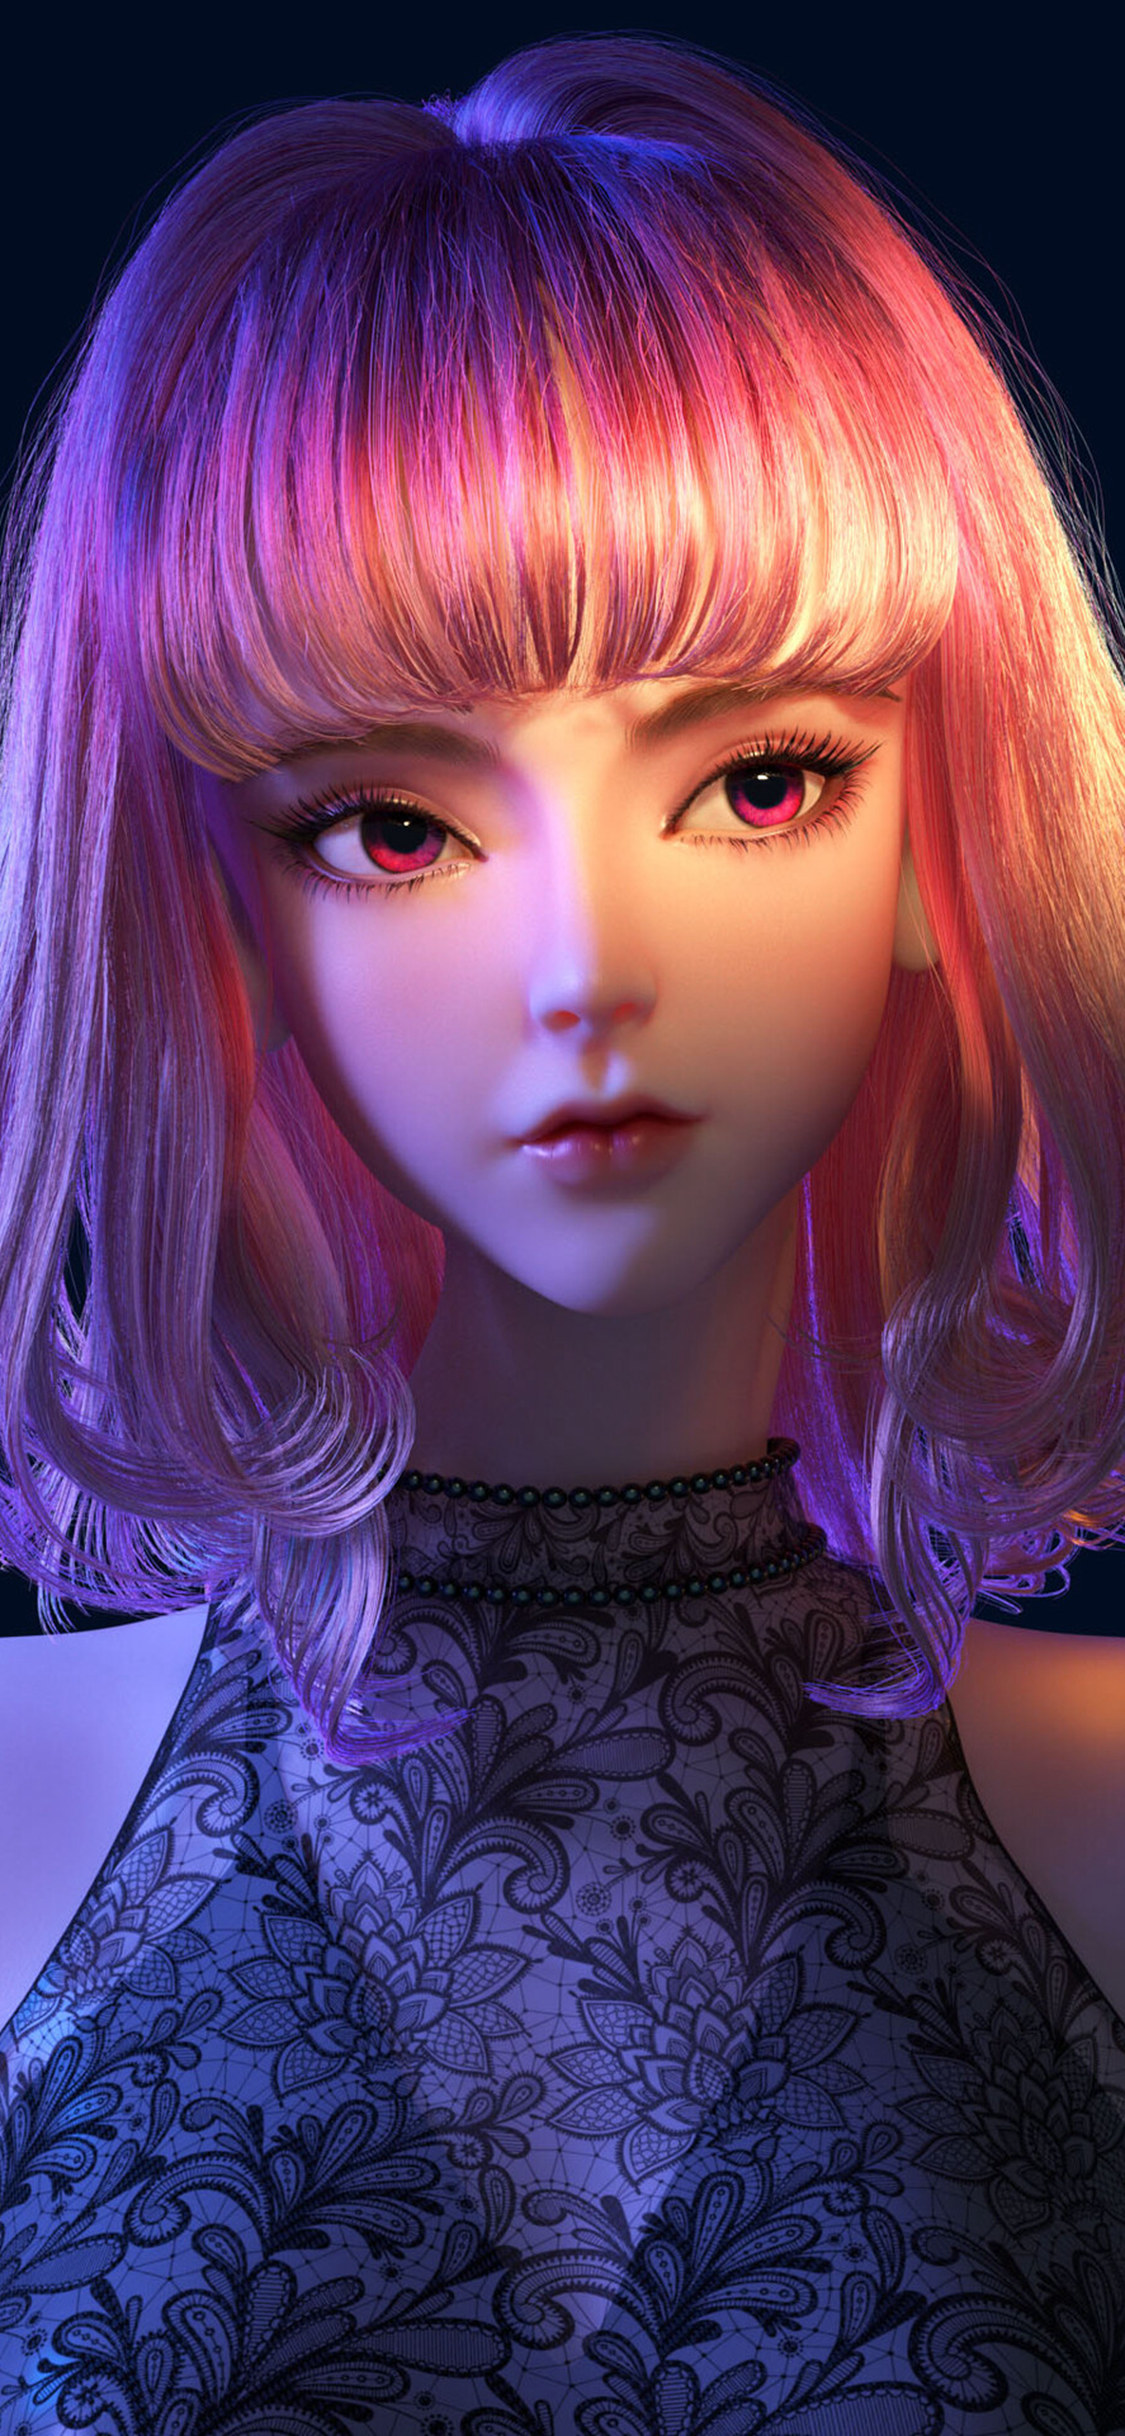 3D动漫粉色短发的<span style='color:red;'>清纯</span>女孩手机背景图片